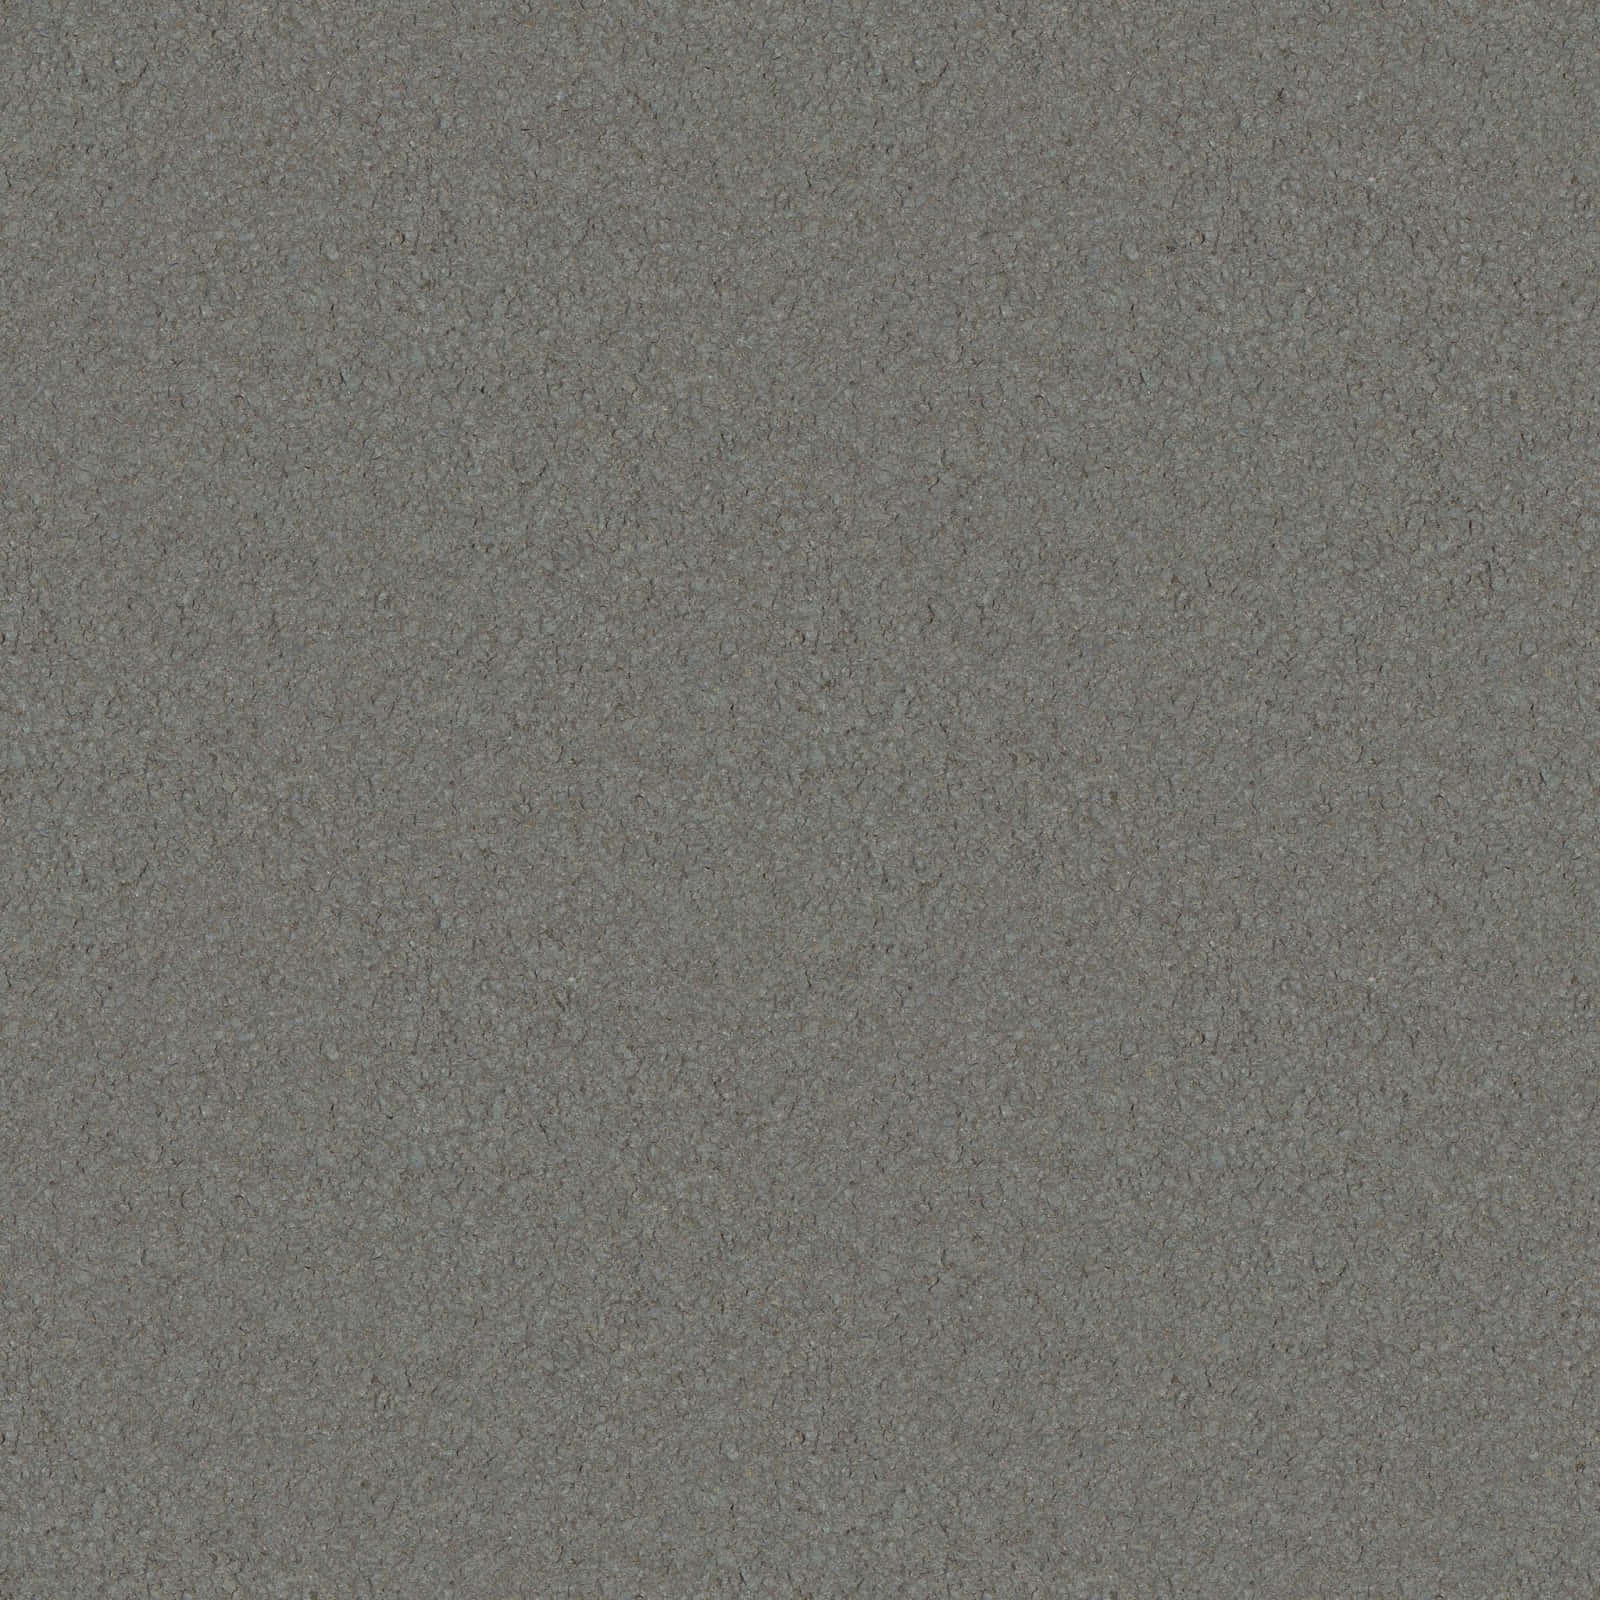 Smooth Grey Granite Textured Surface